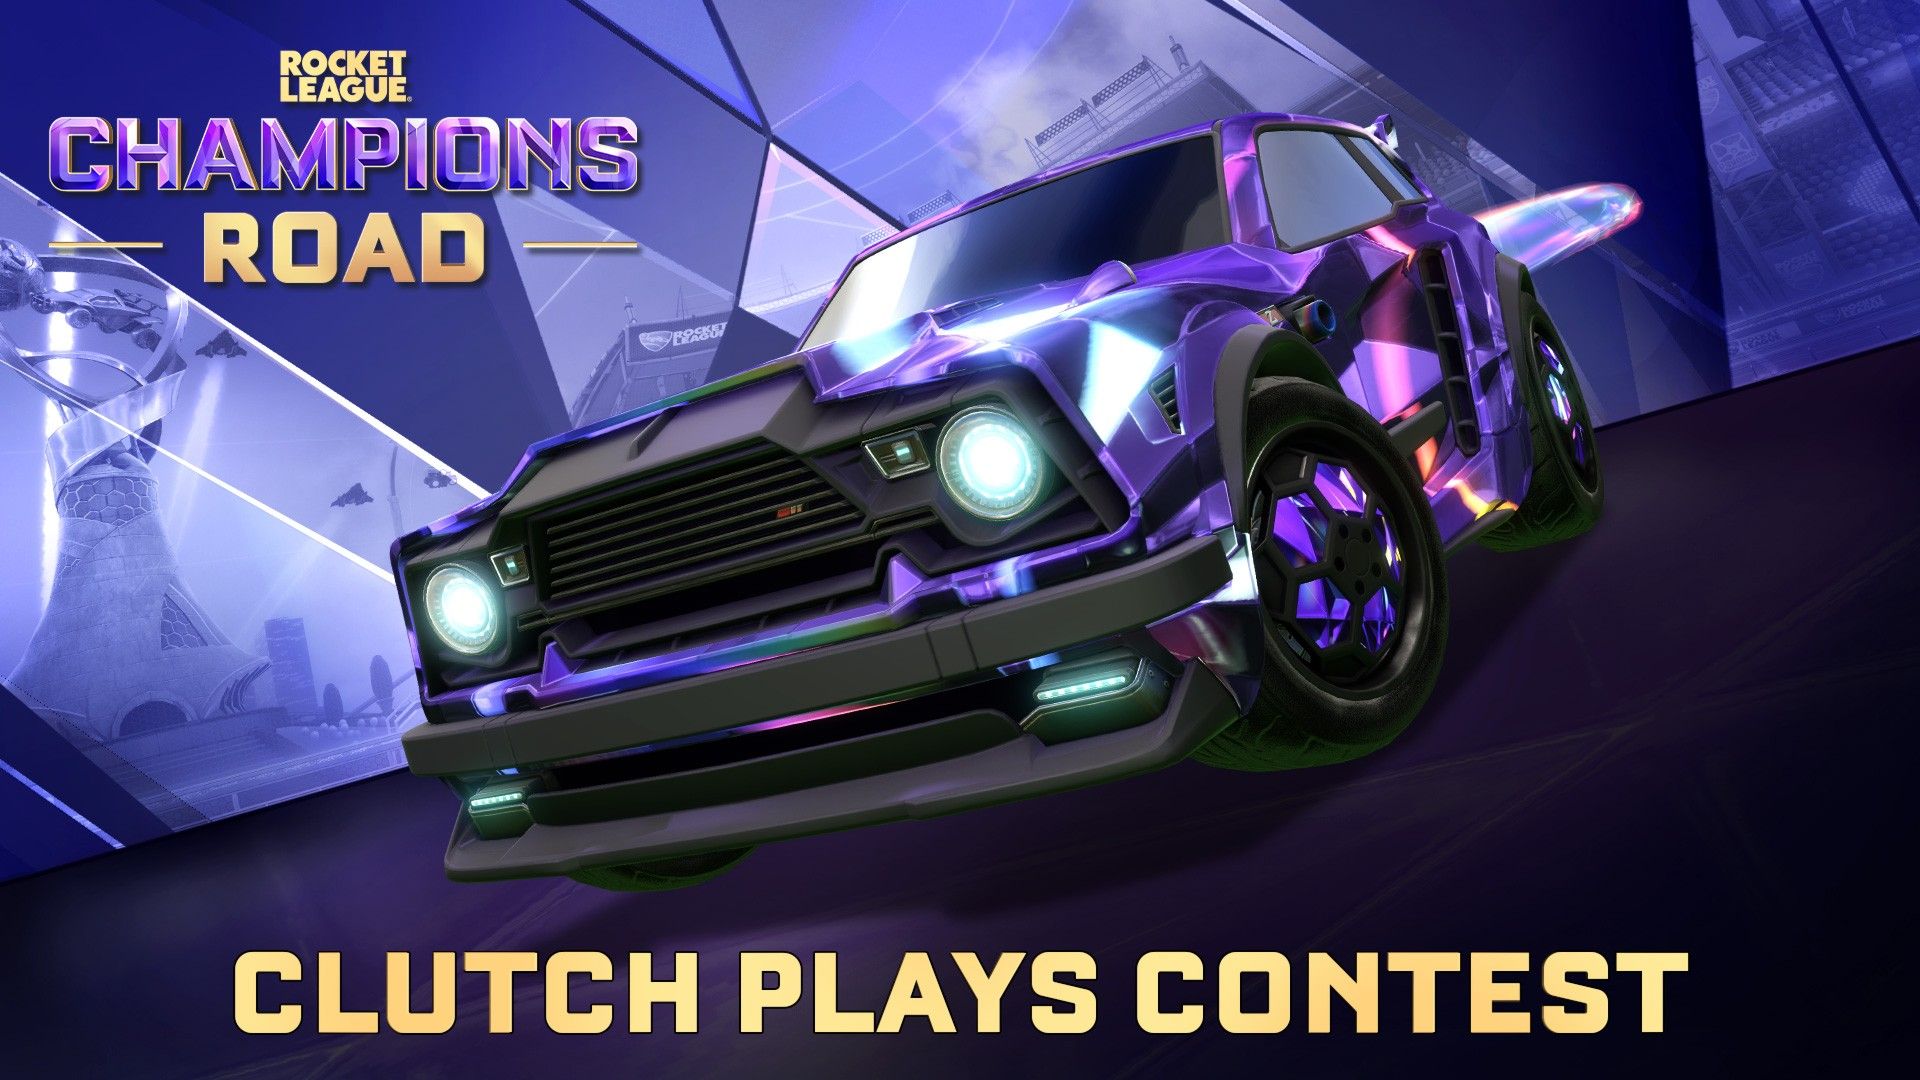 Imágenes del concurso Champions Road Clutch Plays de Rocket League